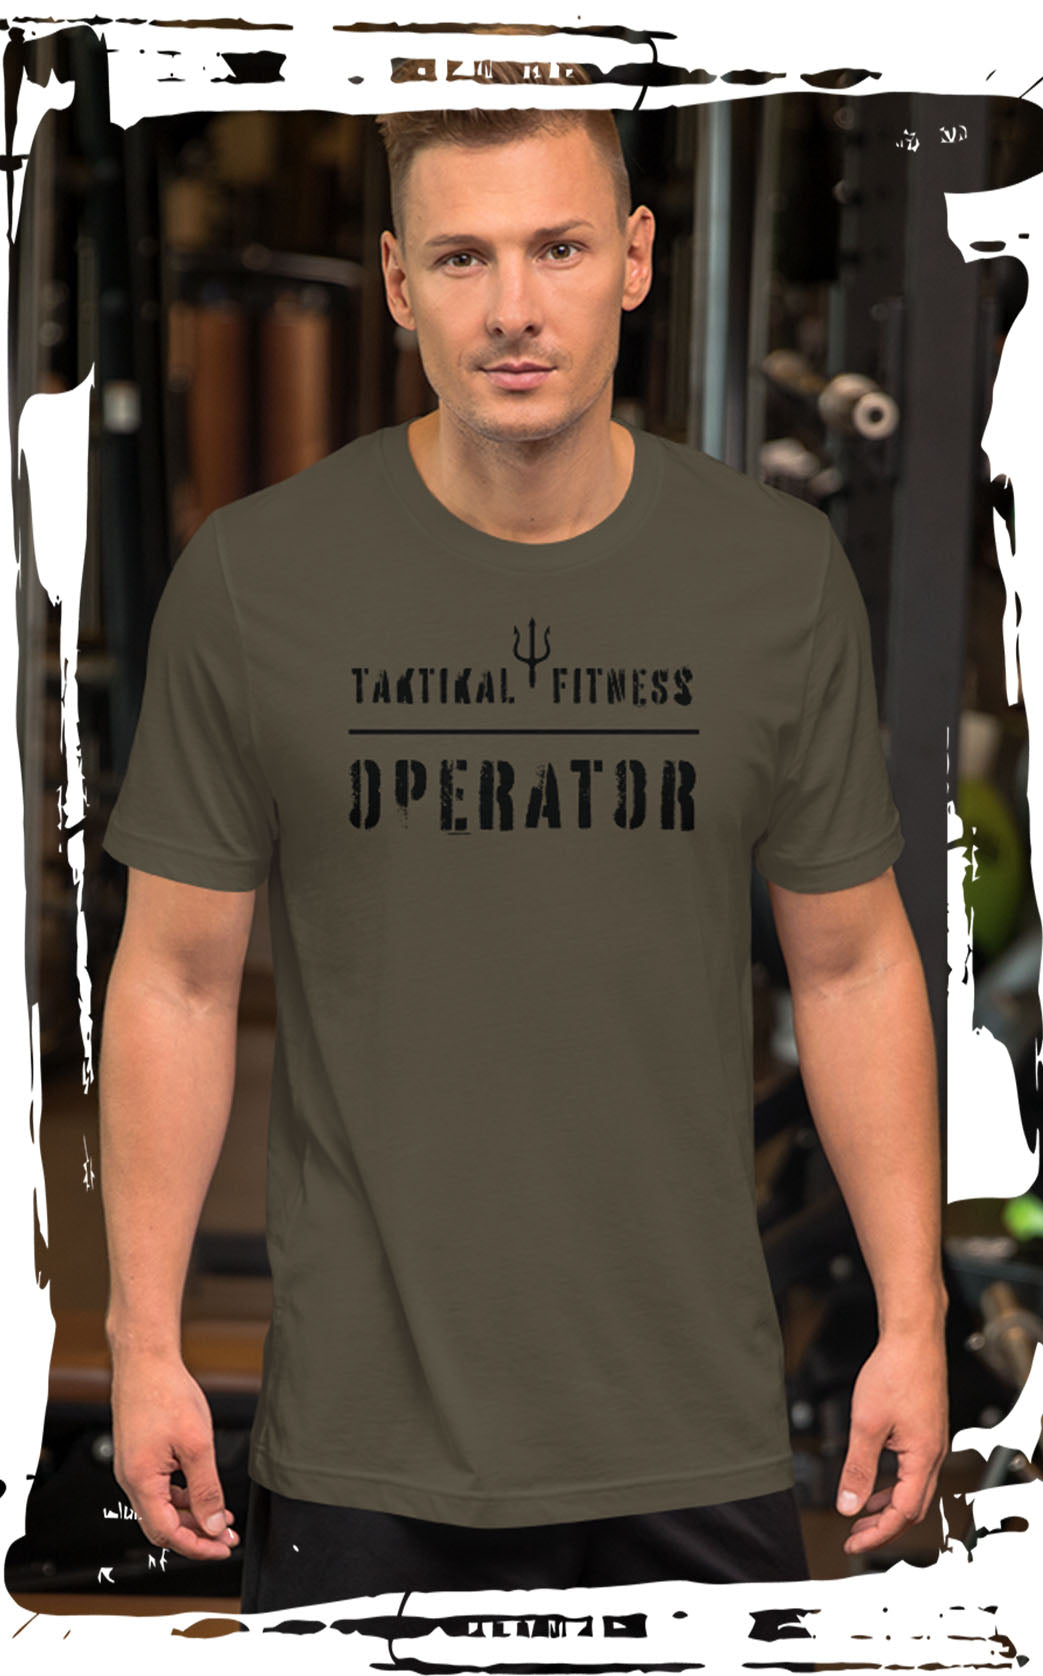 Operator series - Army